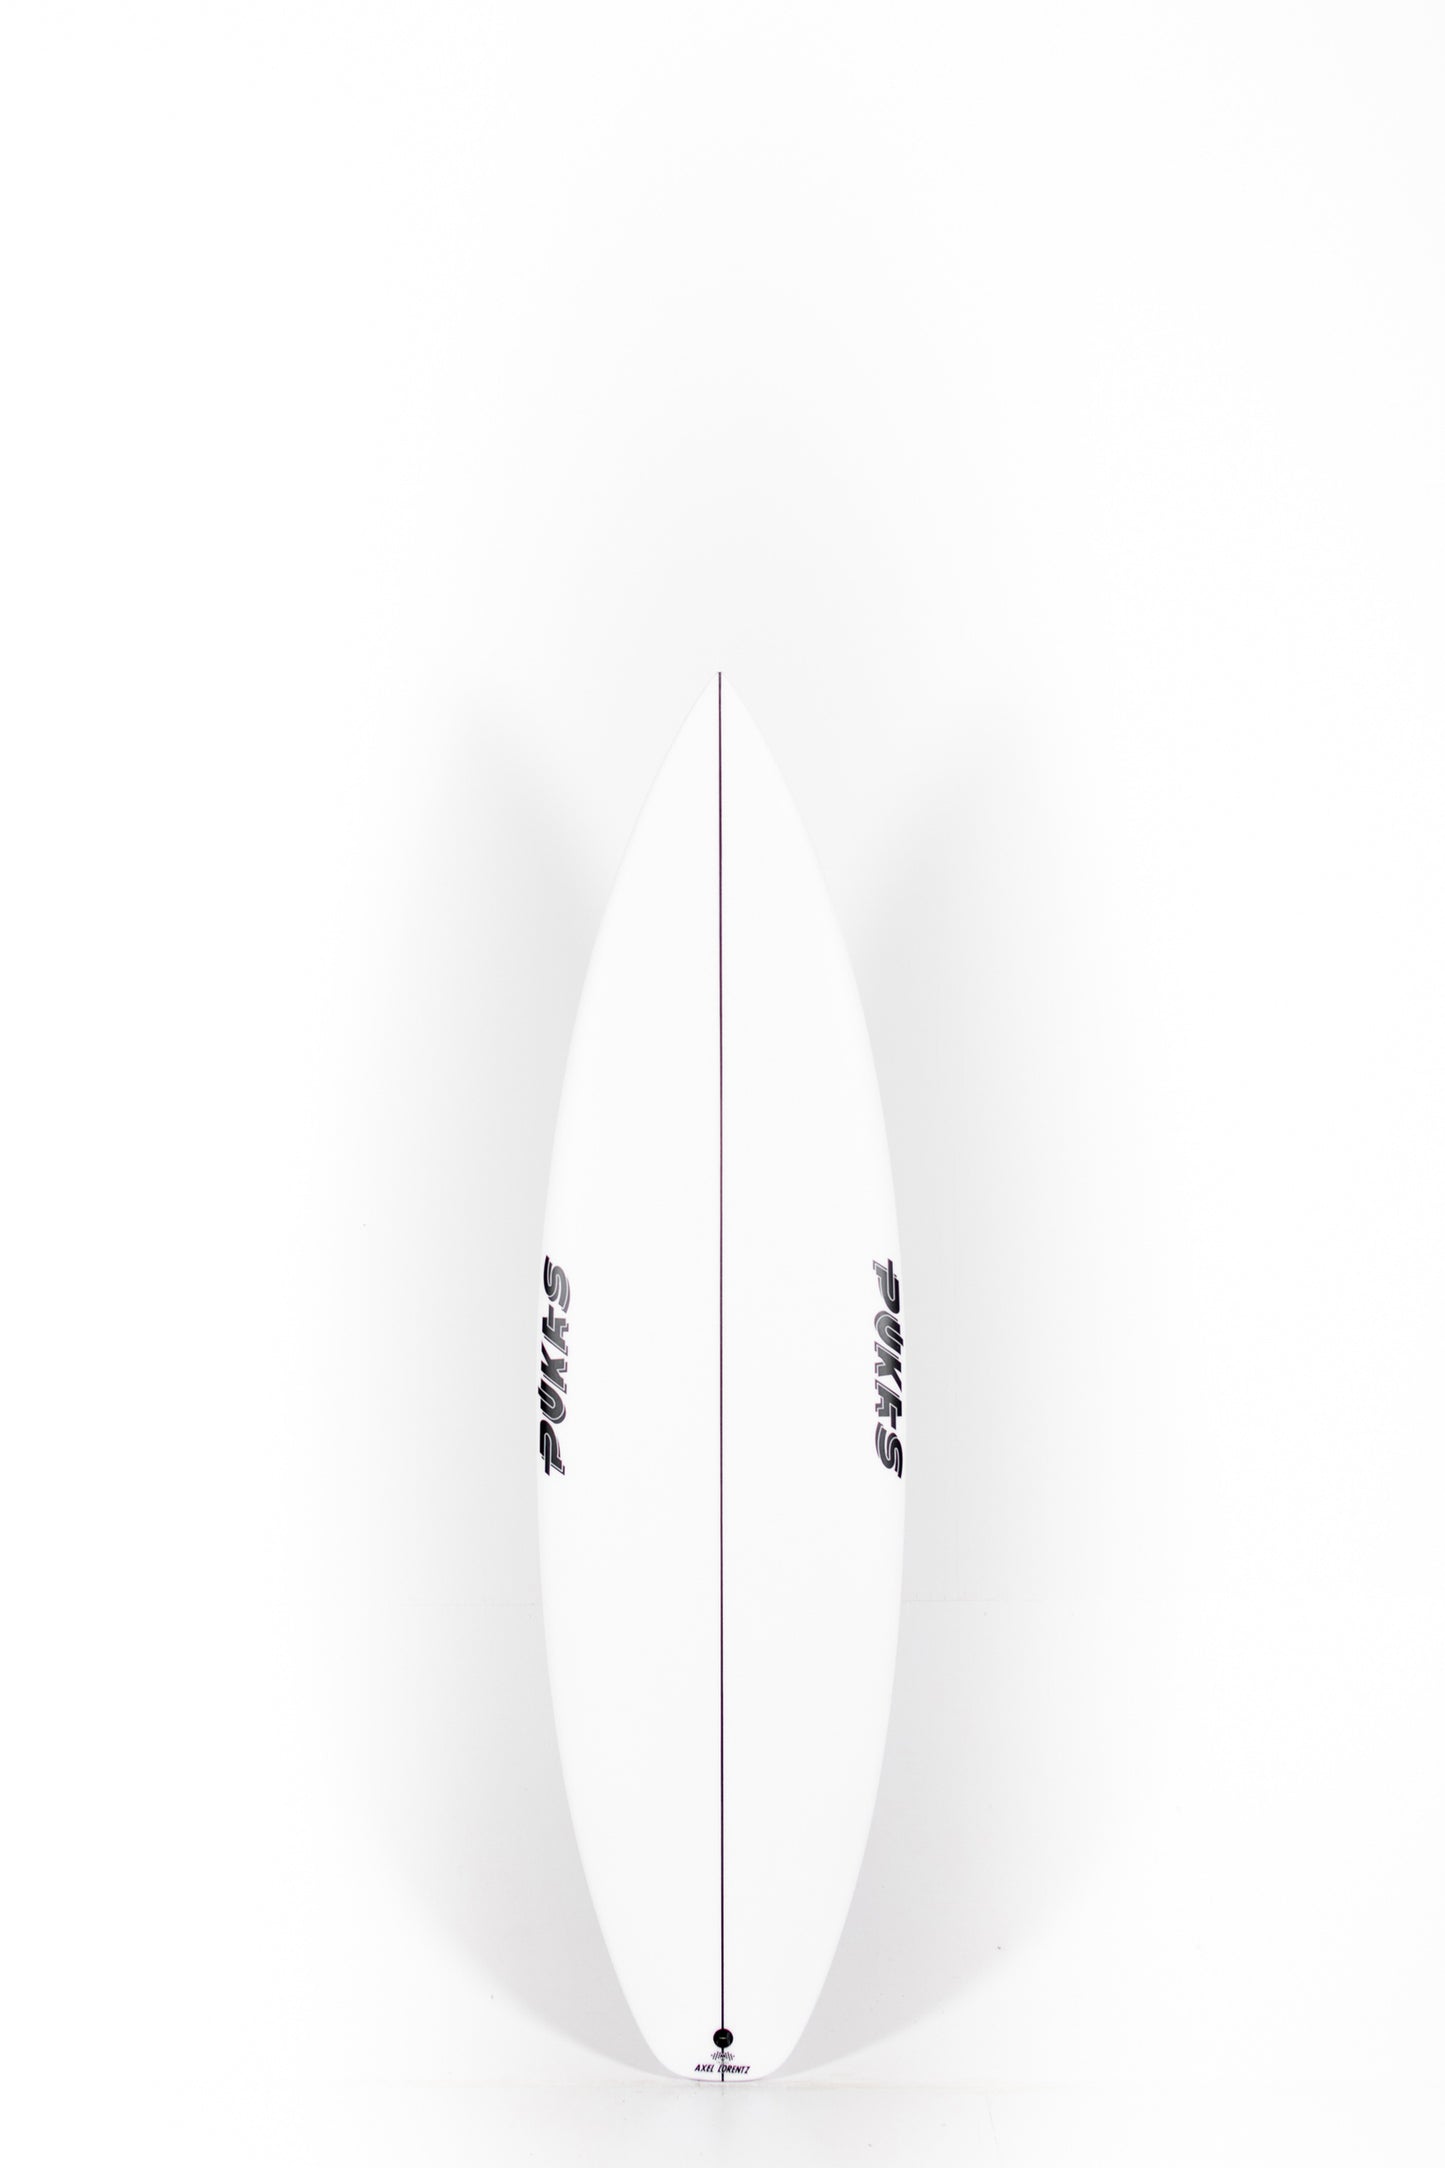 Pukas Surf Shop - Pukas Surfboard - DARK by Axel Lorentz - 6’2” x 19,75 x 2,43 - 31,61L - AX05949